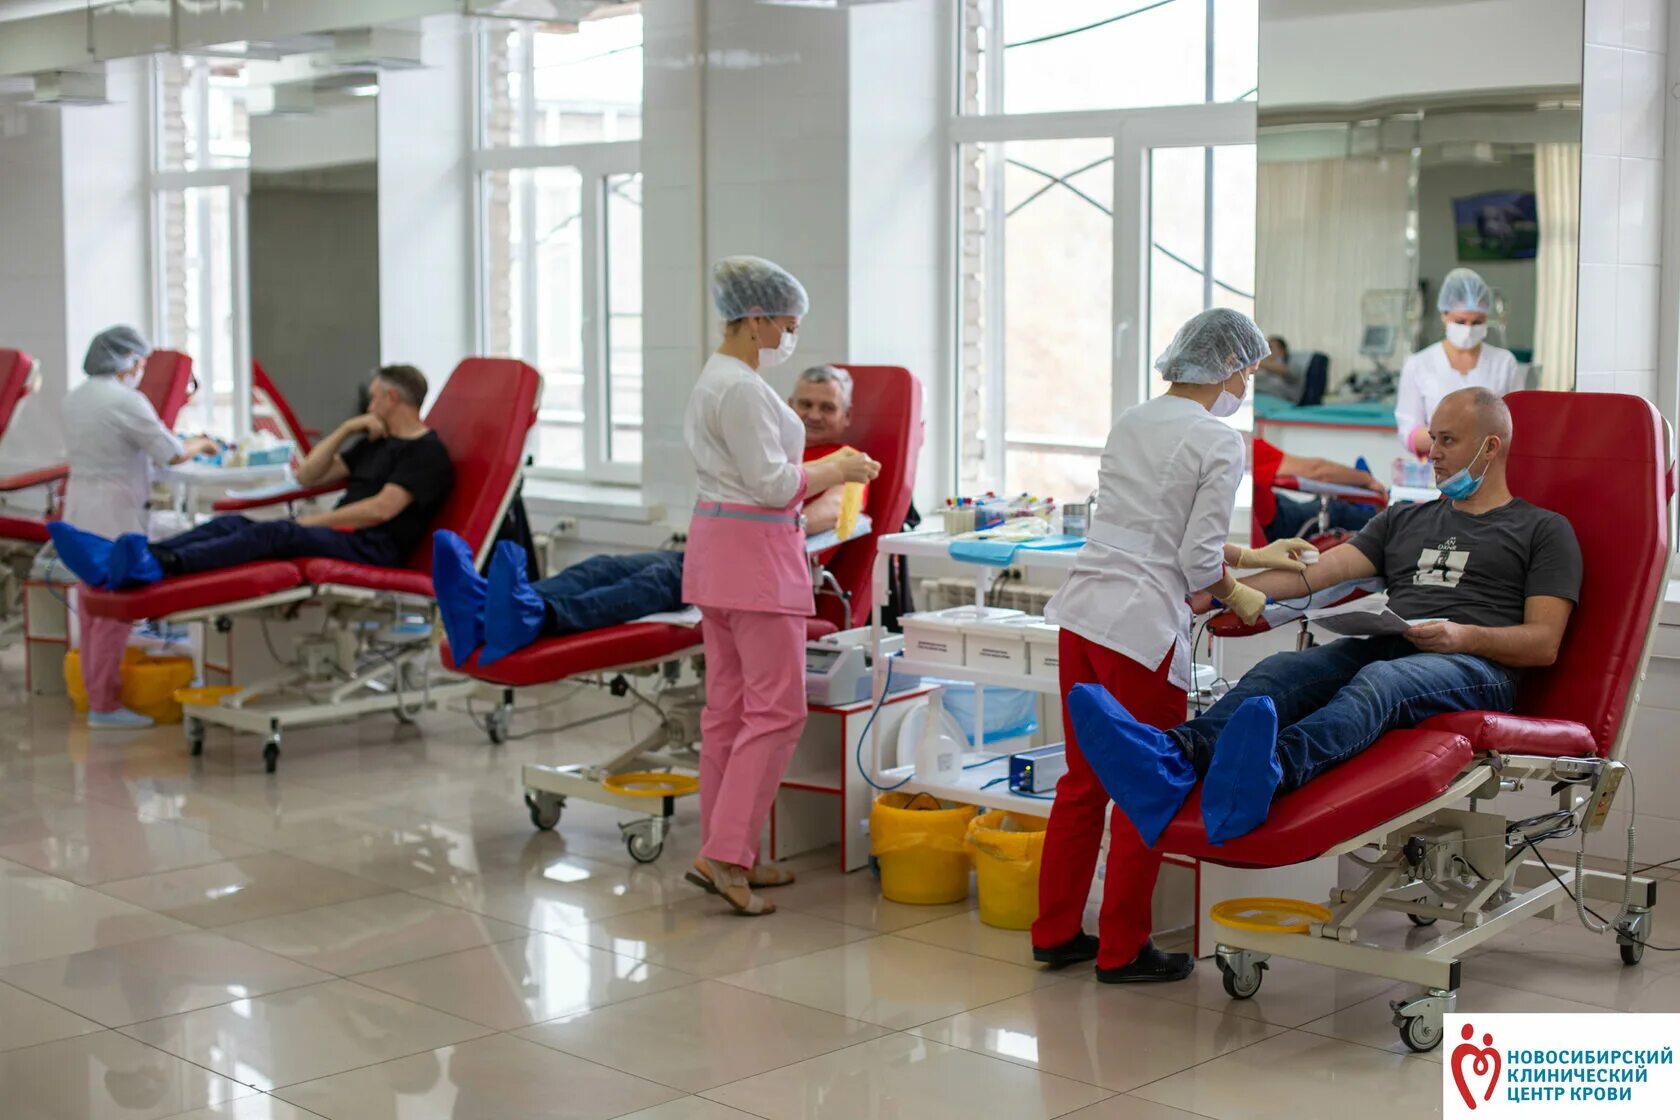 Новосибирский клинический центр крови Новосибирск. Центр донорства крови Новосибирск. Новосибирский центр крови внутри.